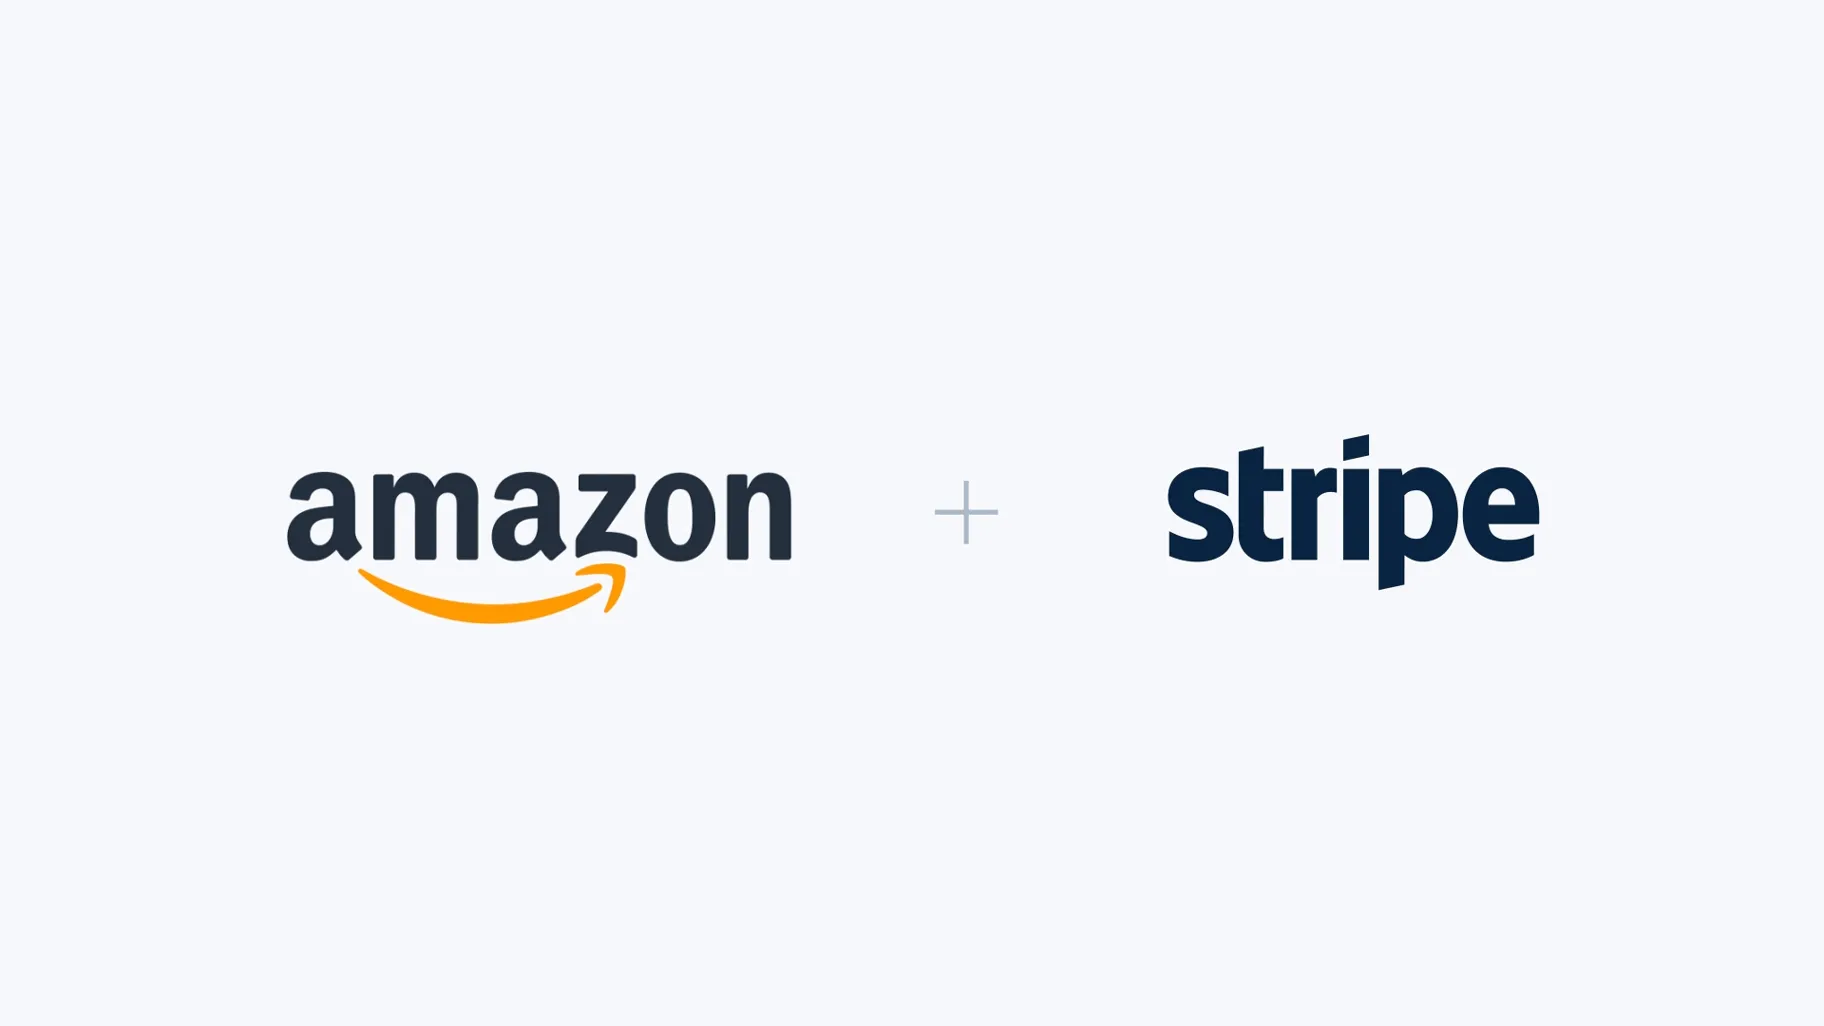 Amazon and Stripe partnership